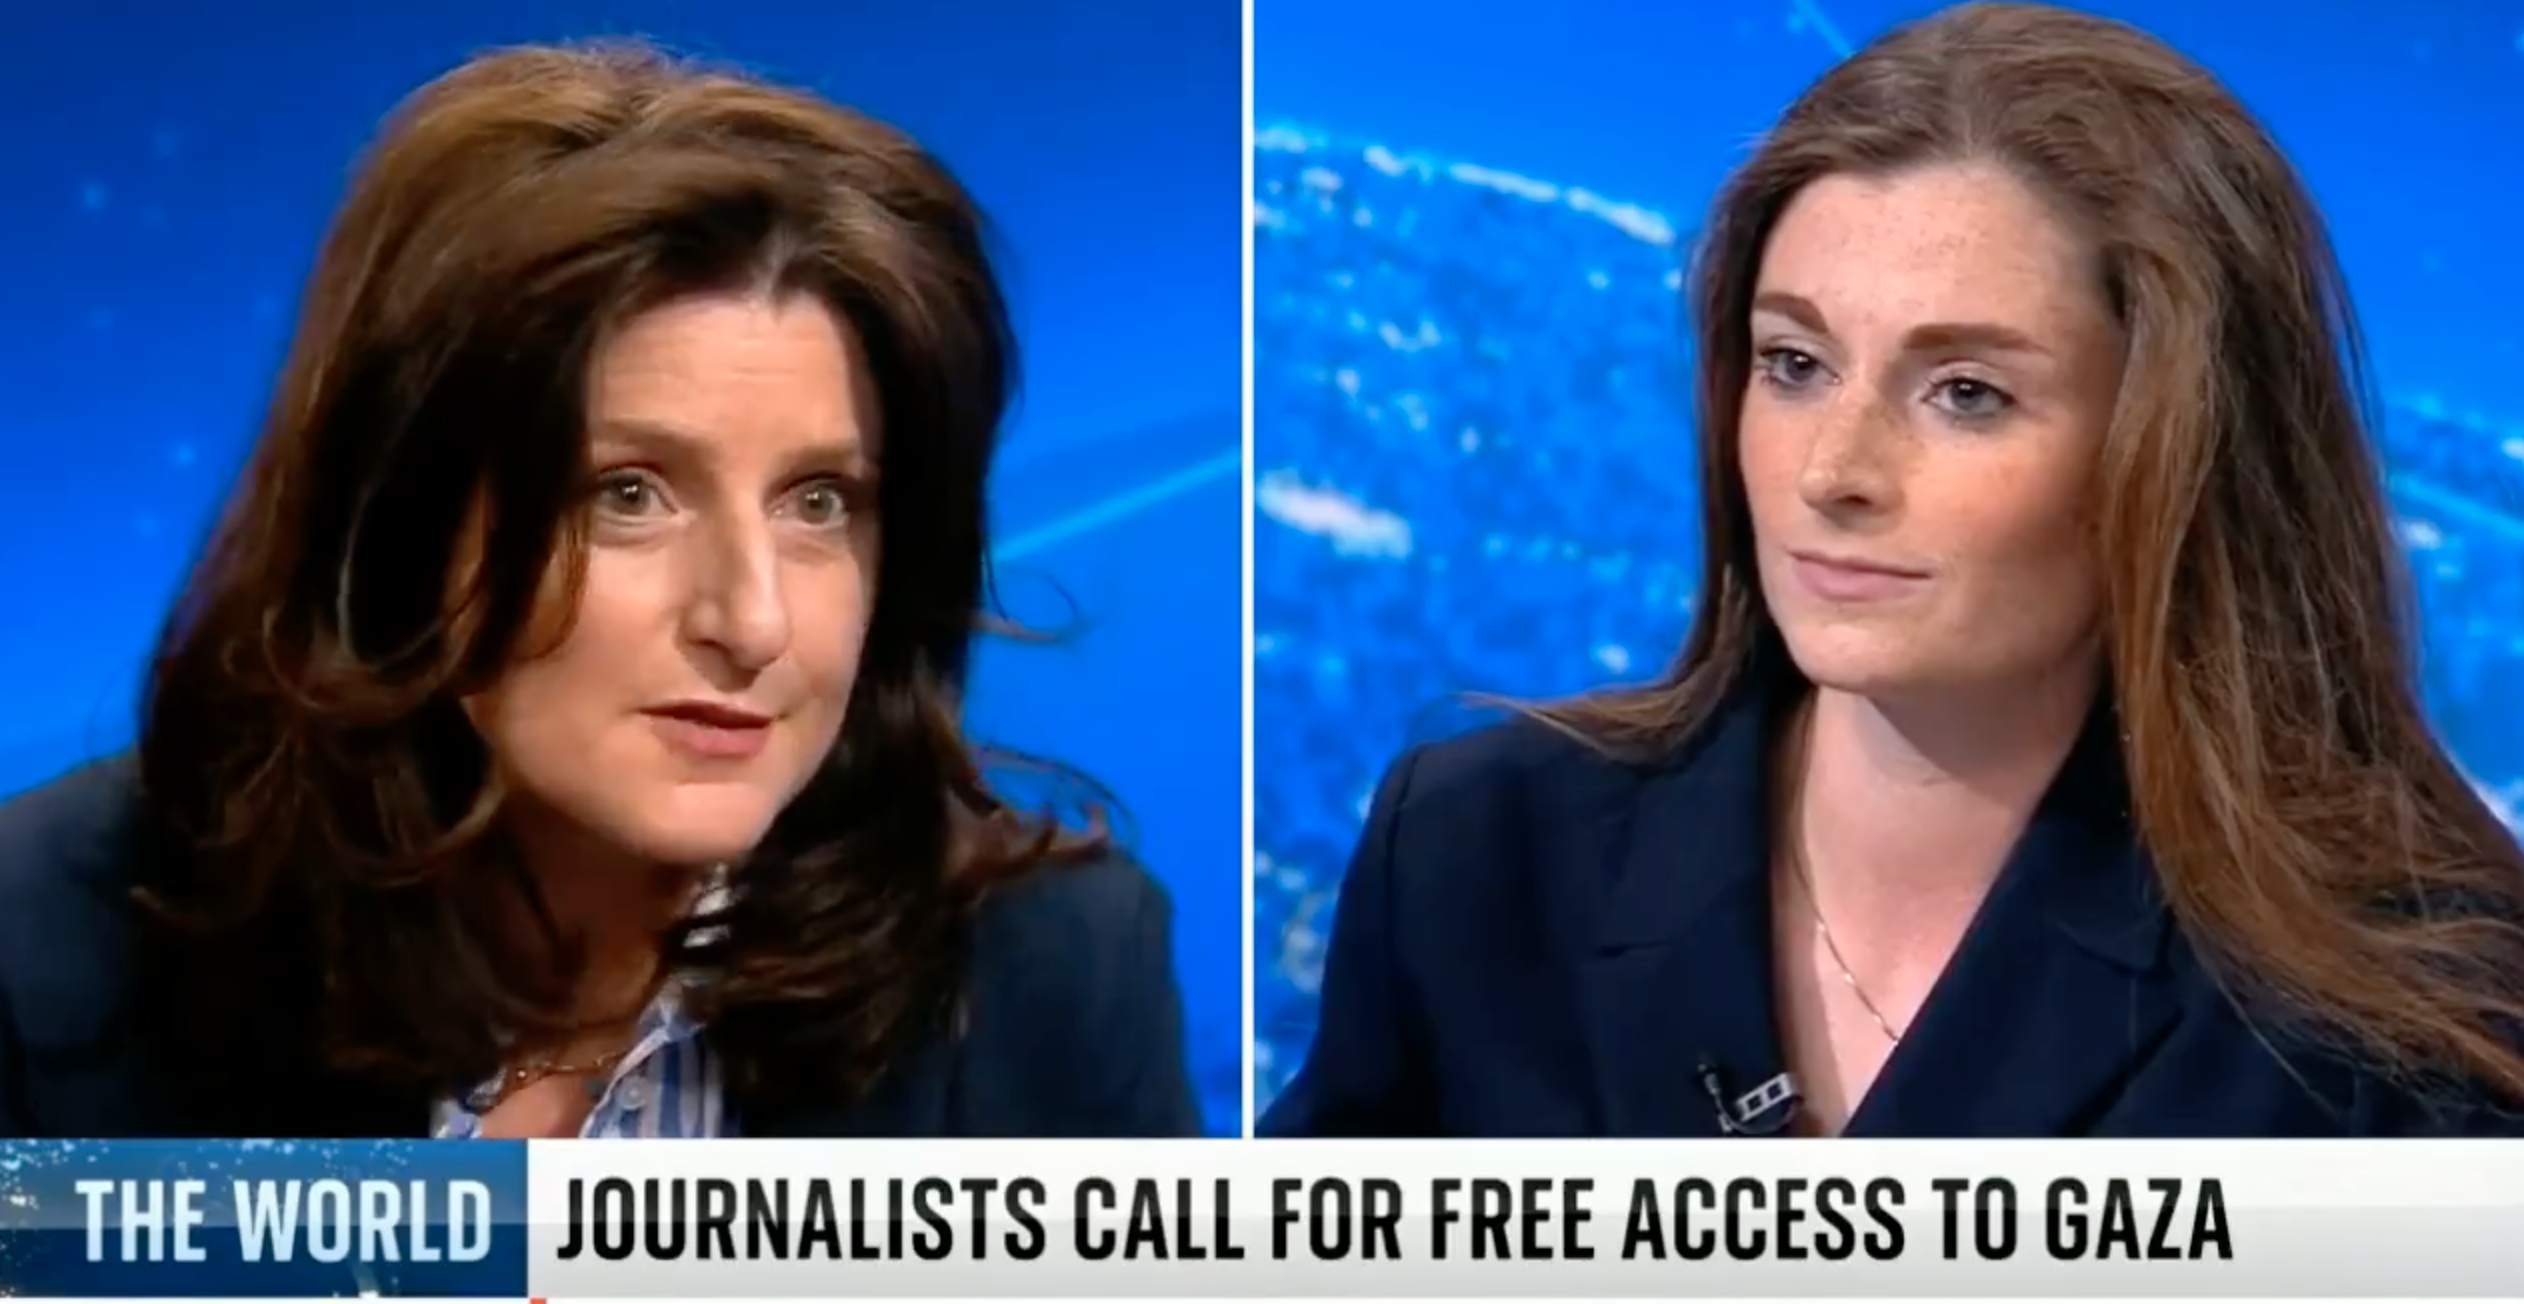 Rachel Shabi Defends Gaza Journalists Reporting, Blasts Israel For Obstructing International Media Access [Video]